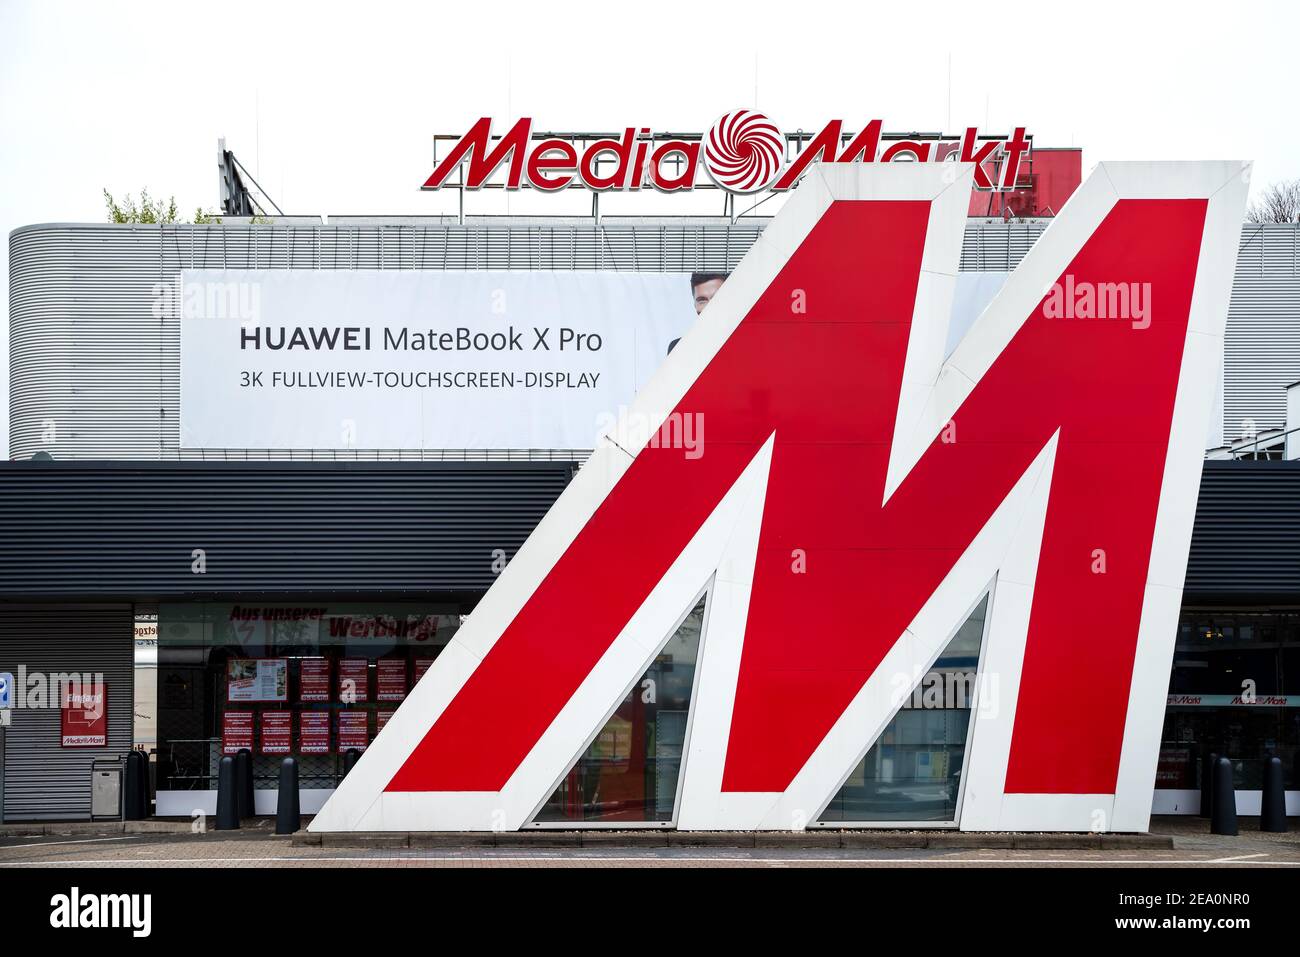 Media markt media markt hi-res stock photography and images - Alamy